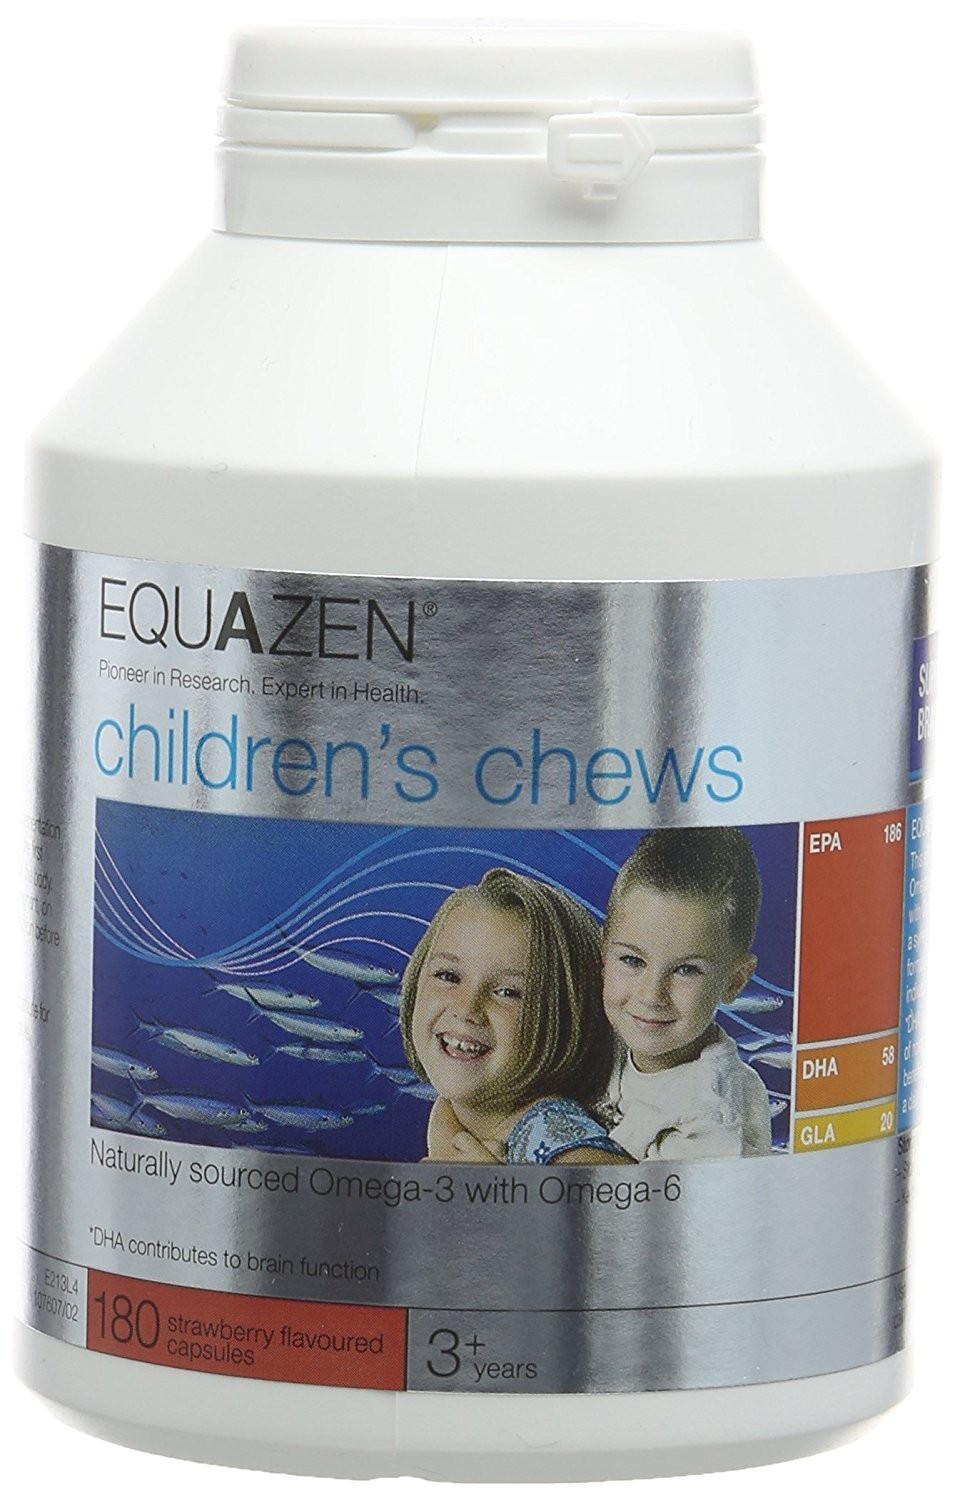 Equazen children's chews